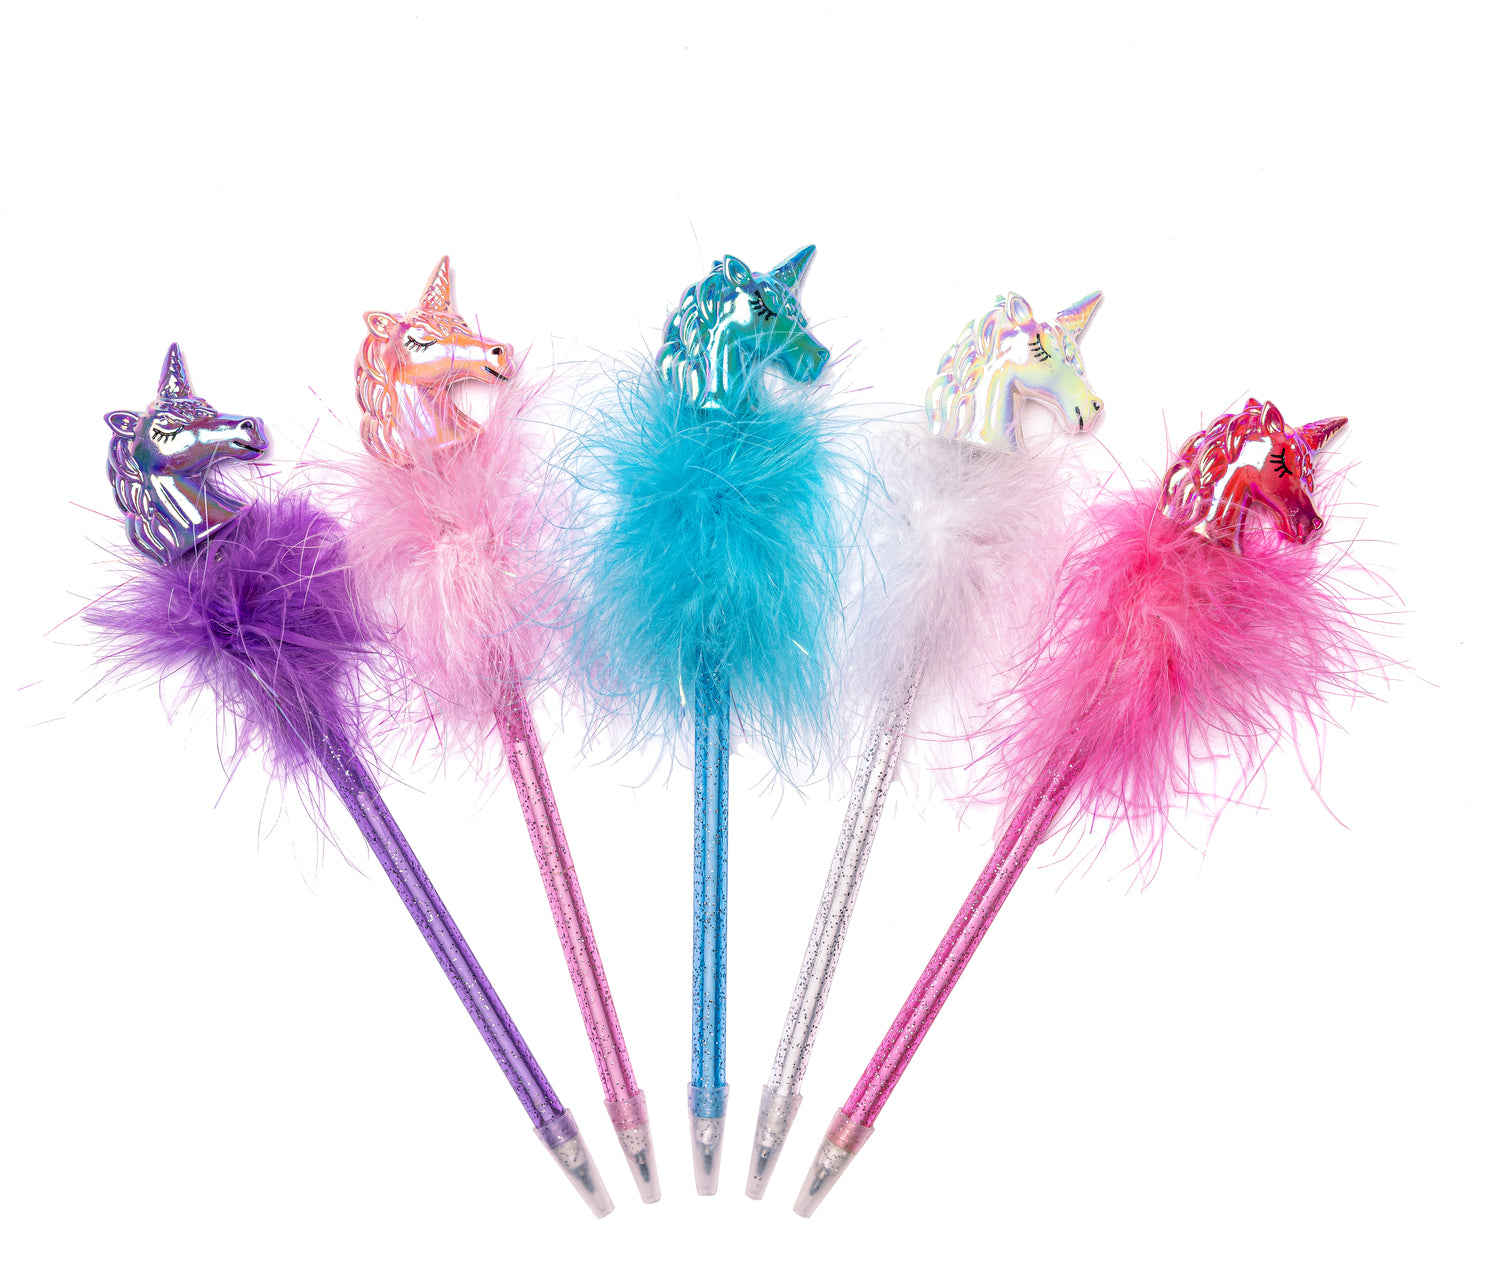 Iridescent Unicorn Pens (assorted)